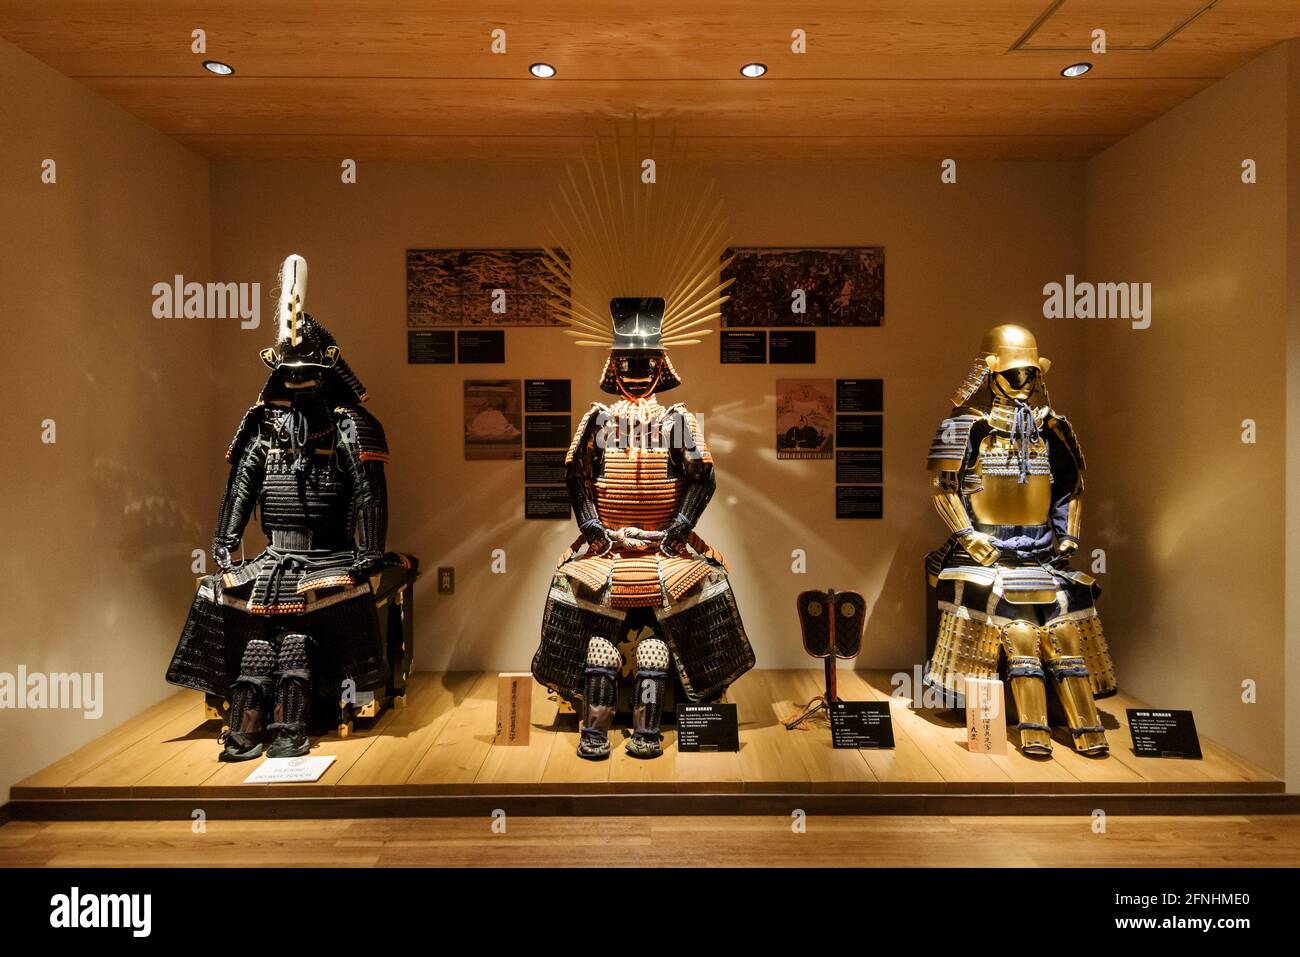 Tokyo, Japan - January 12, 2016: Samurai armors and samurai swords are displayed in the Samurai Museum in Kabukicho Shinjuku-ku, Tokyo - Japan Stock Photo